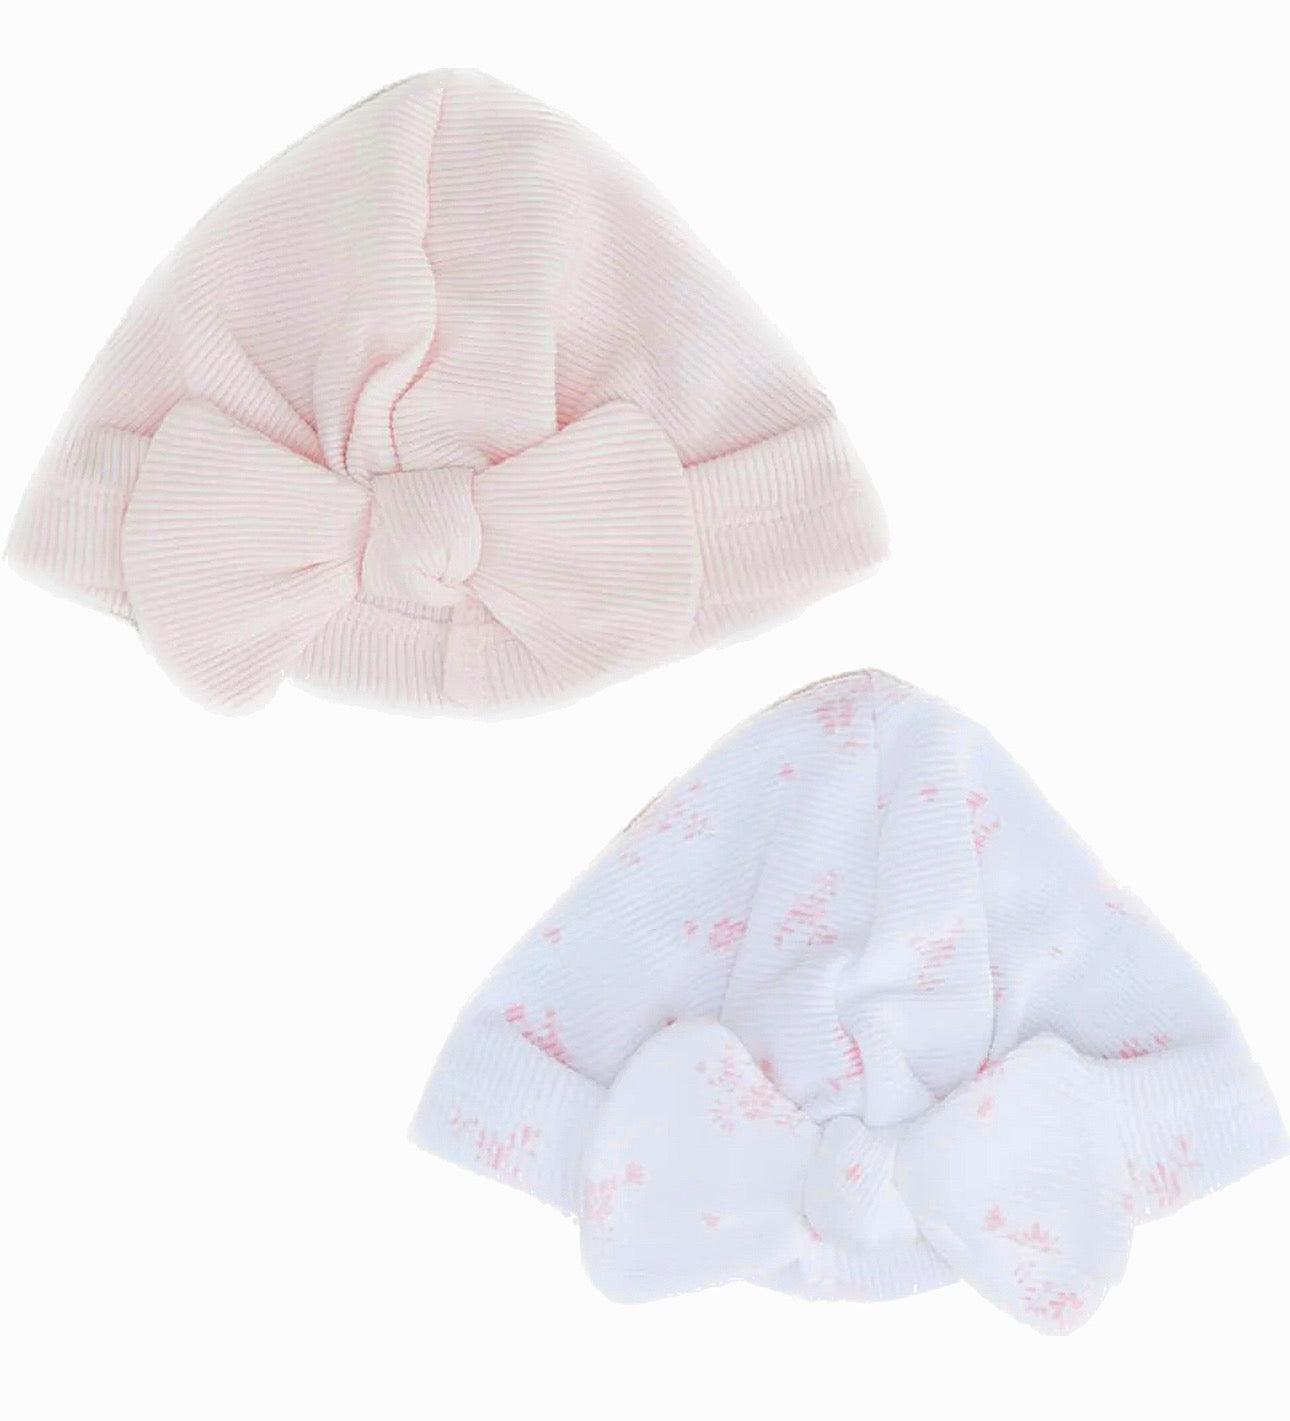 Girls 2 Pack Turban Baby Hats (0-3M)